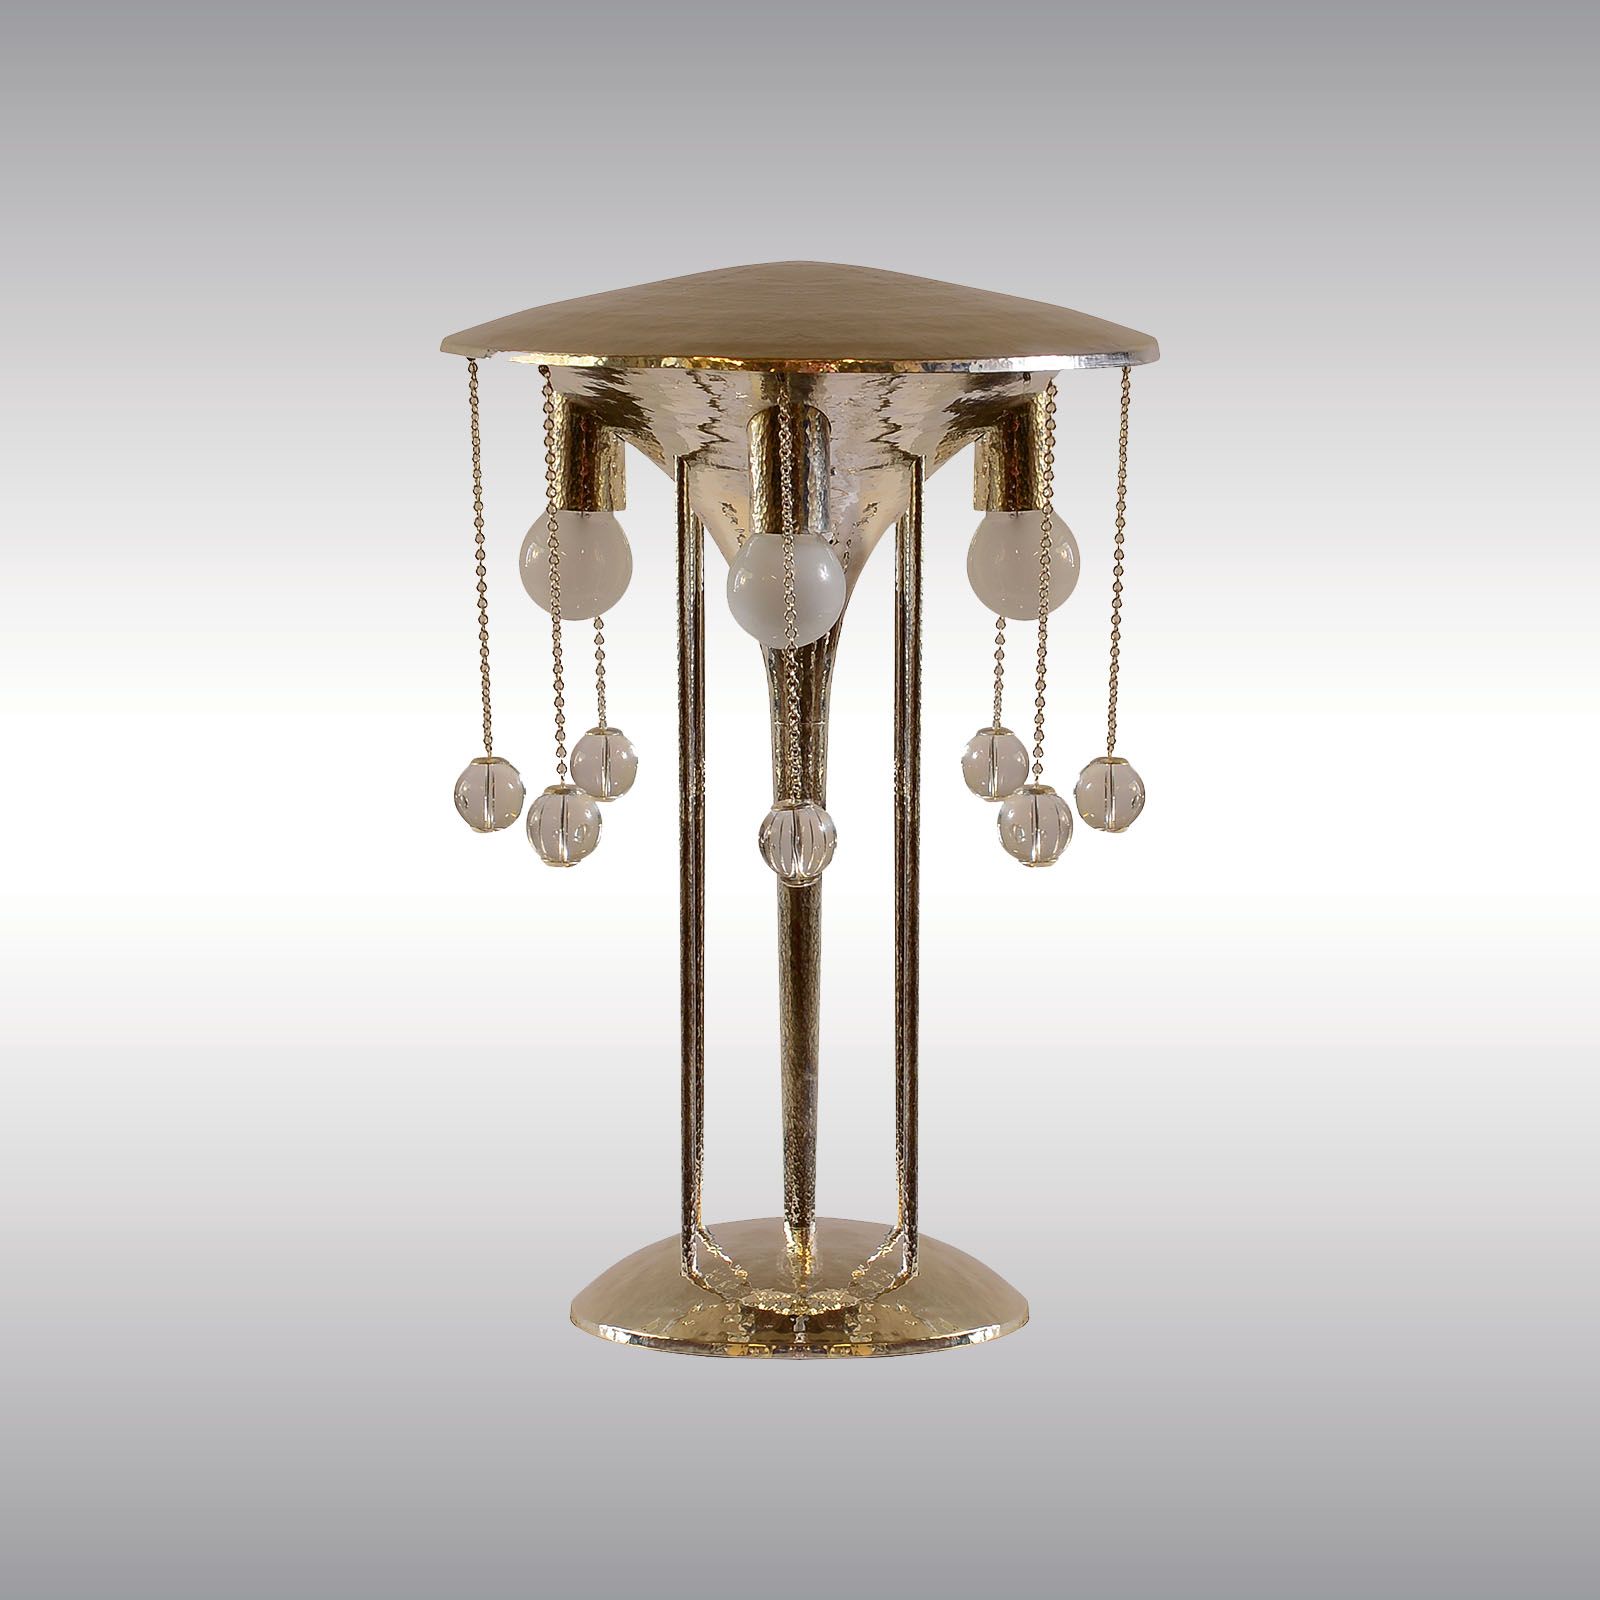 WOKA LAMPS VIENNA - OrderNr.: 21515|Hoffmann hammered Table Lamp - Design: Josef Hoffmann